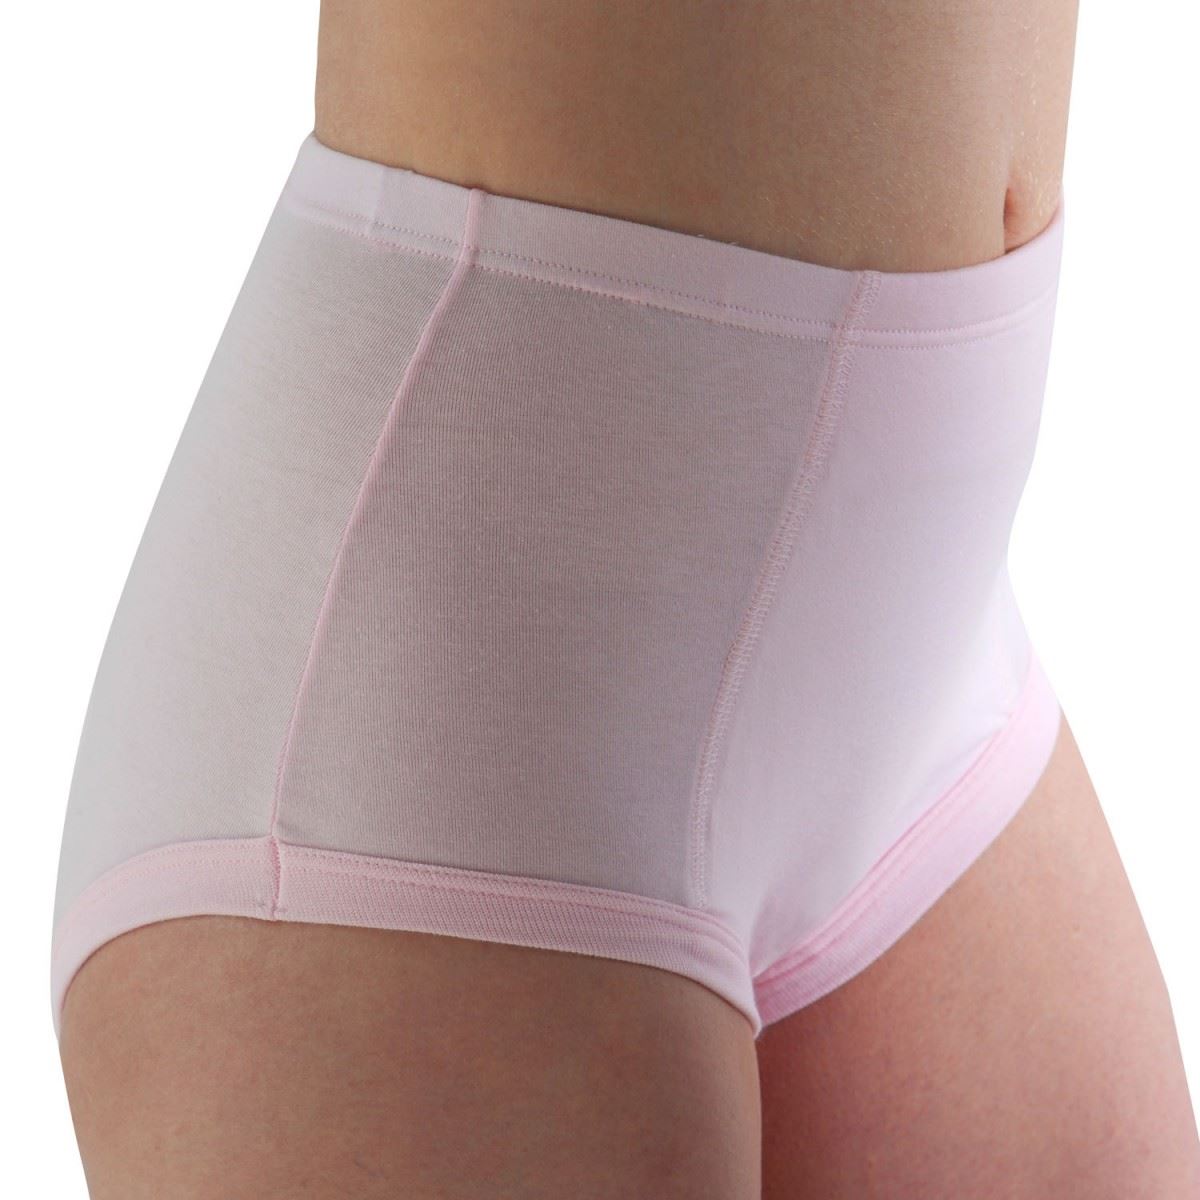 Prism Health Services. Conni Women's Classic Reusable Underwear